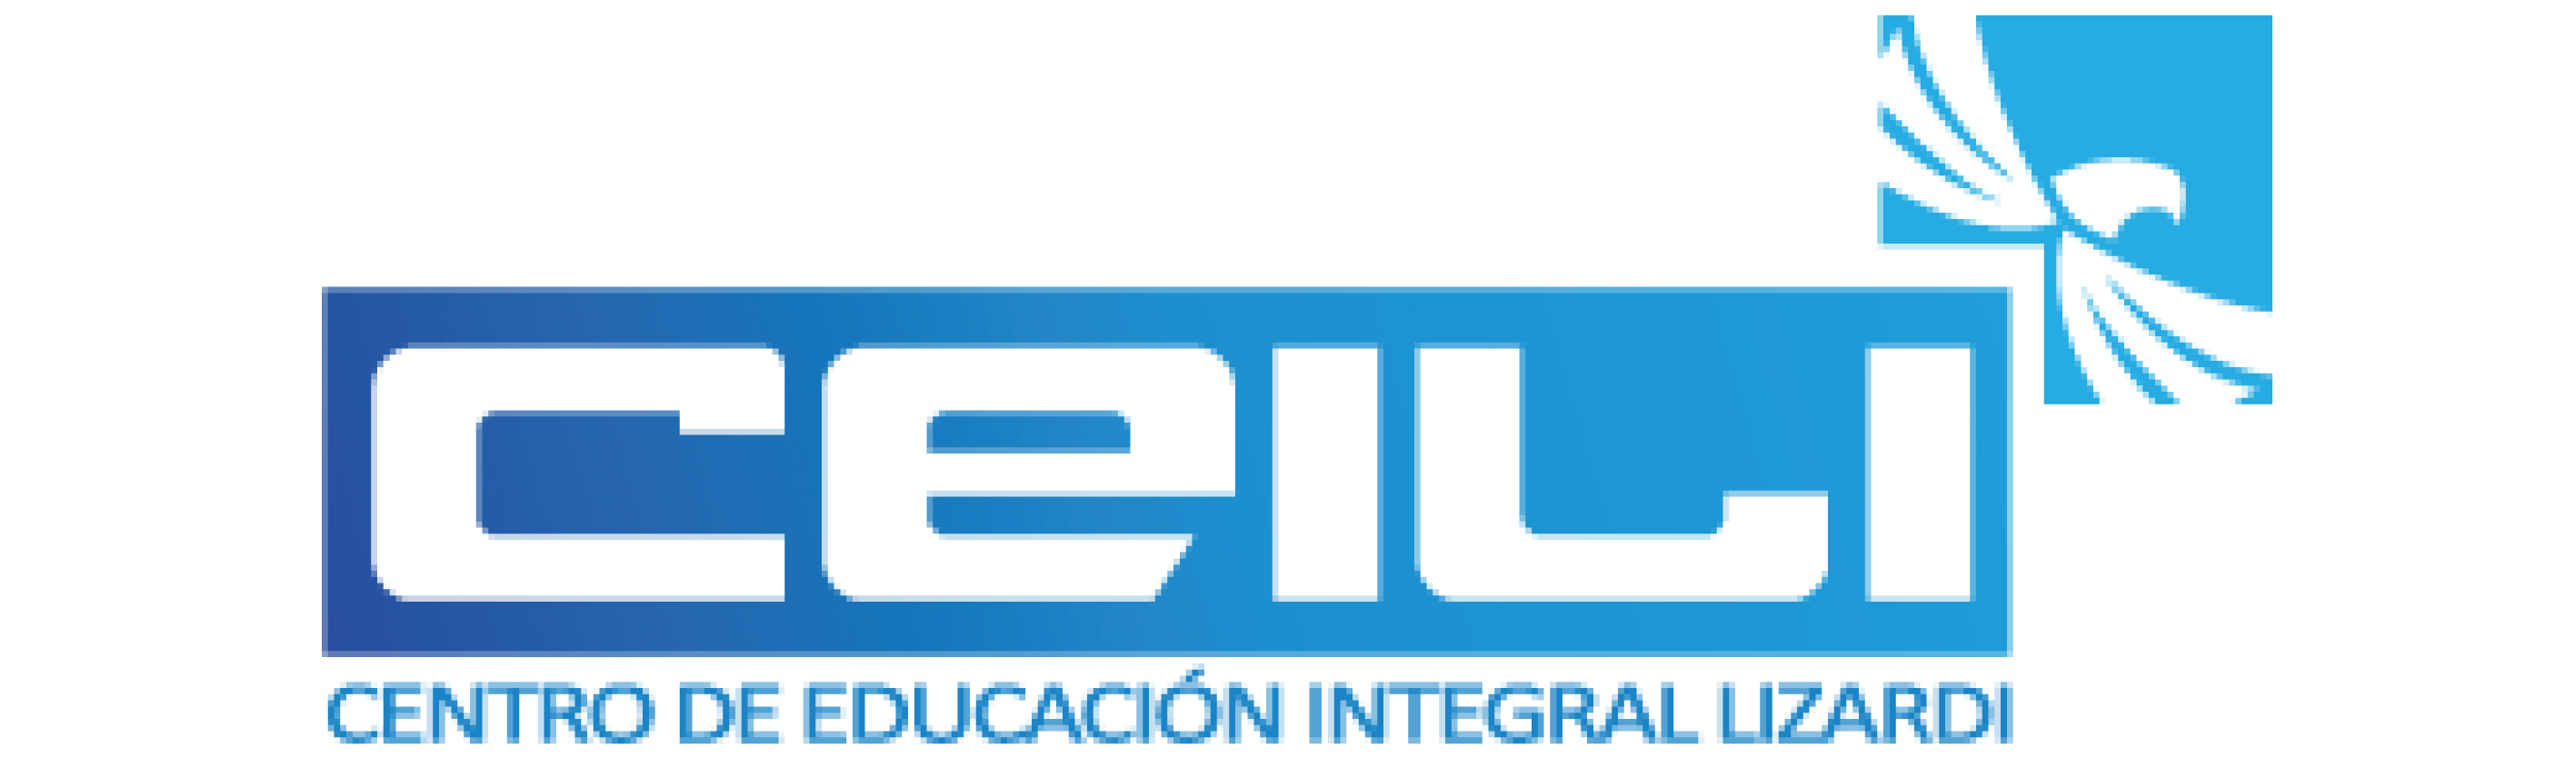 logo CEILI